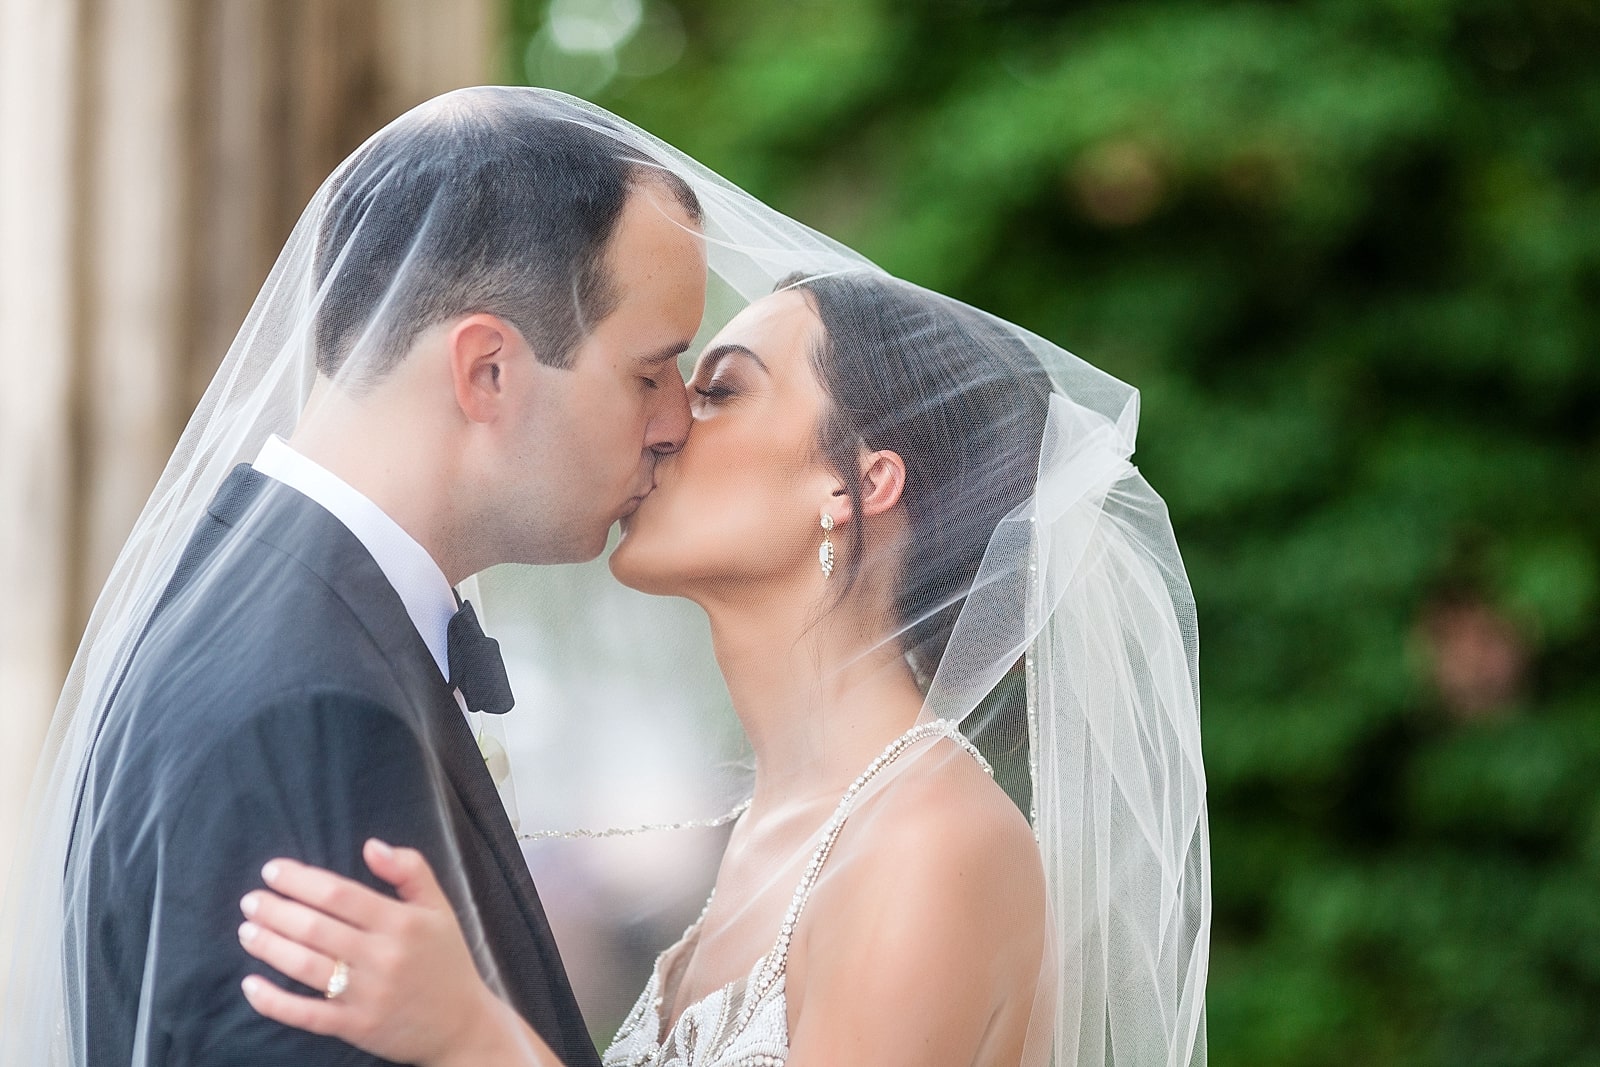 Bride and groom portrait, kissing under veil, under veil portrait, wedding portrait